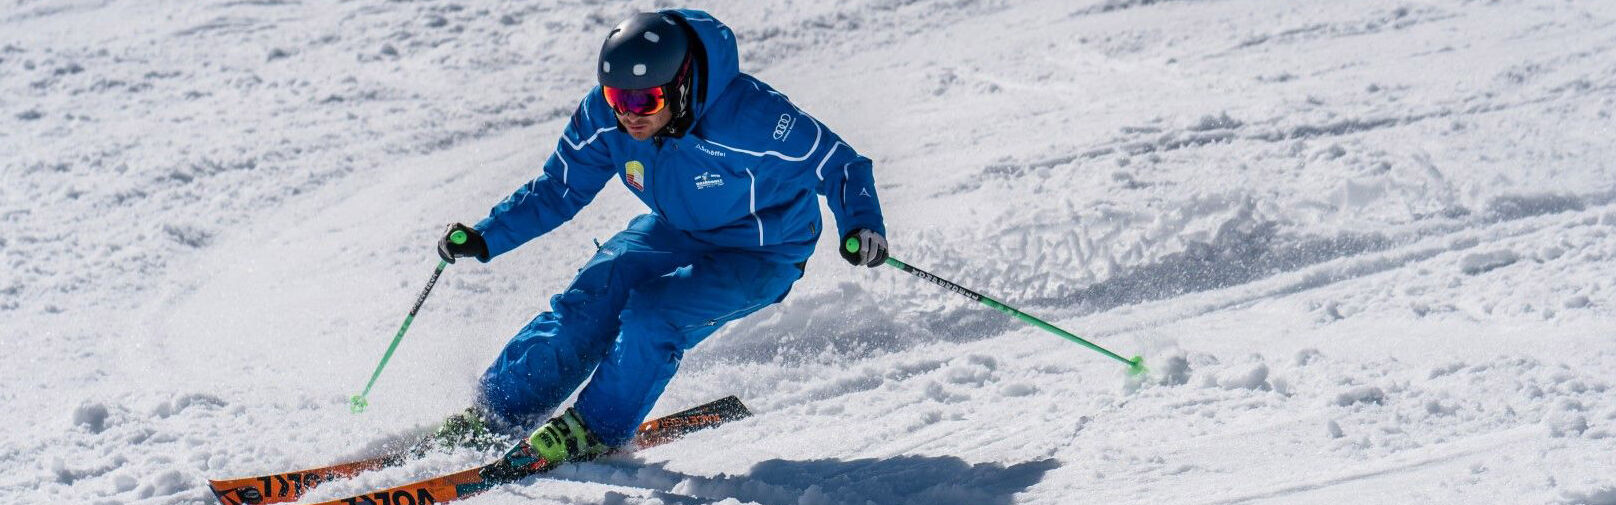 Learn to ski in Flachau - ski courses, snowboard courses - ski school Flachau